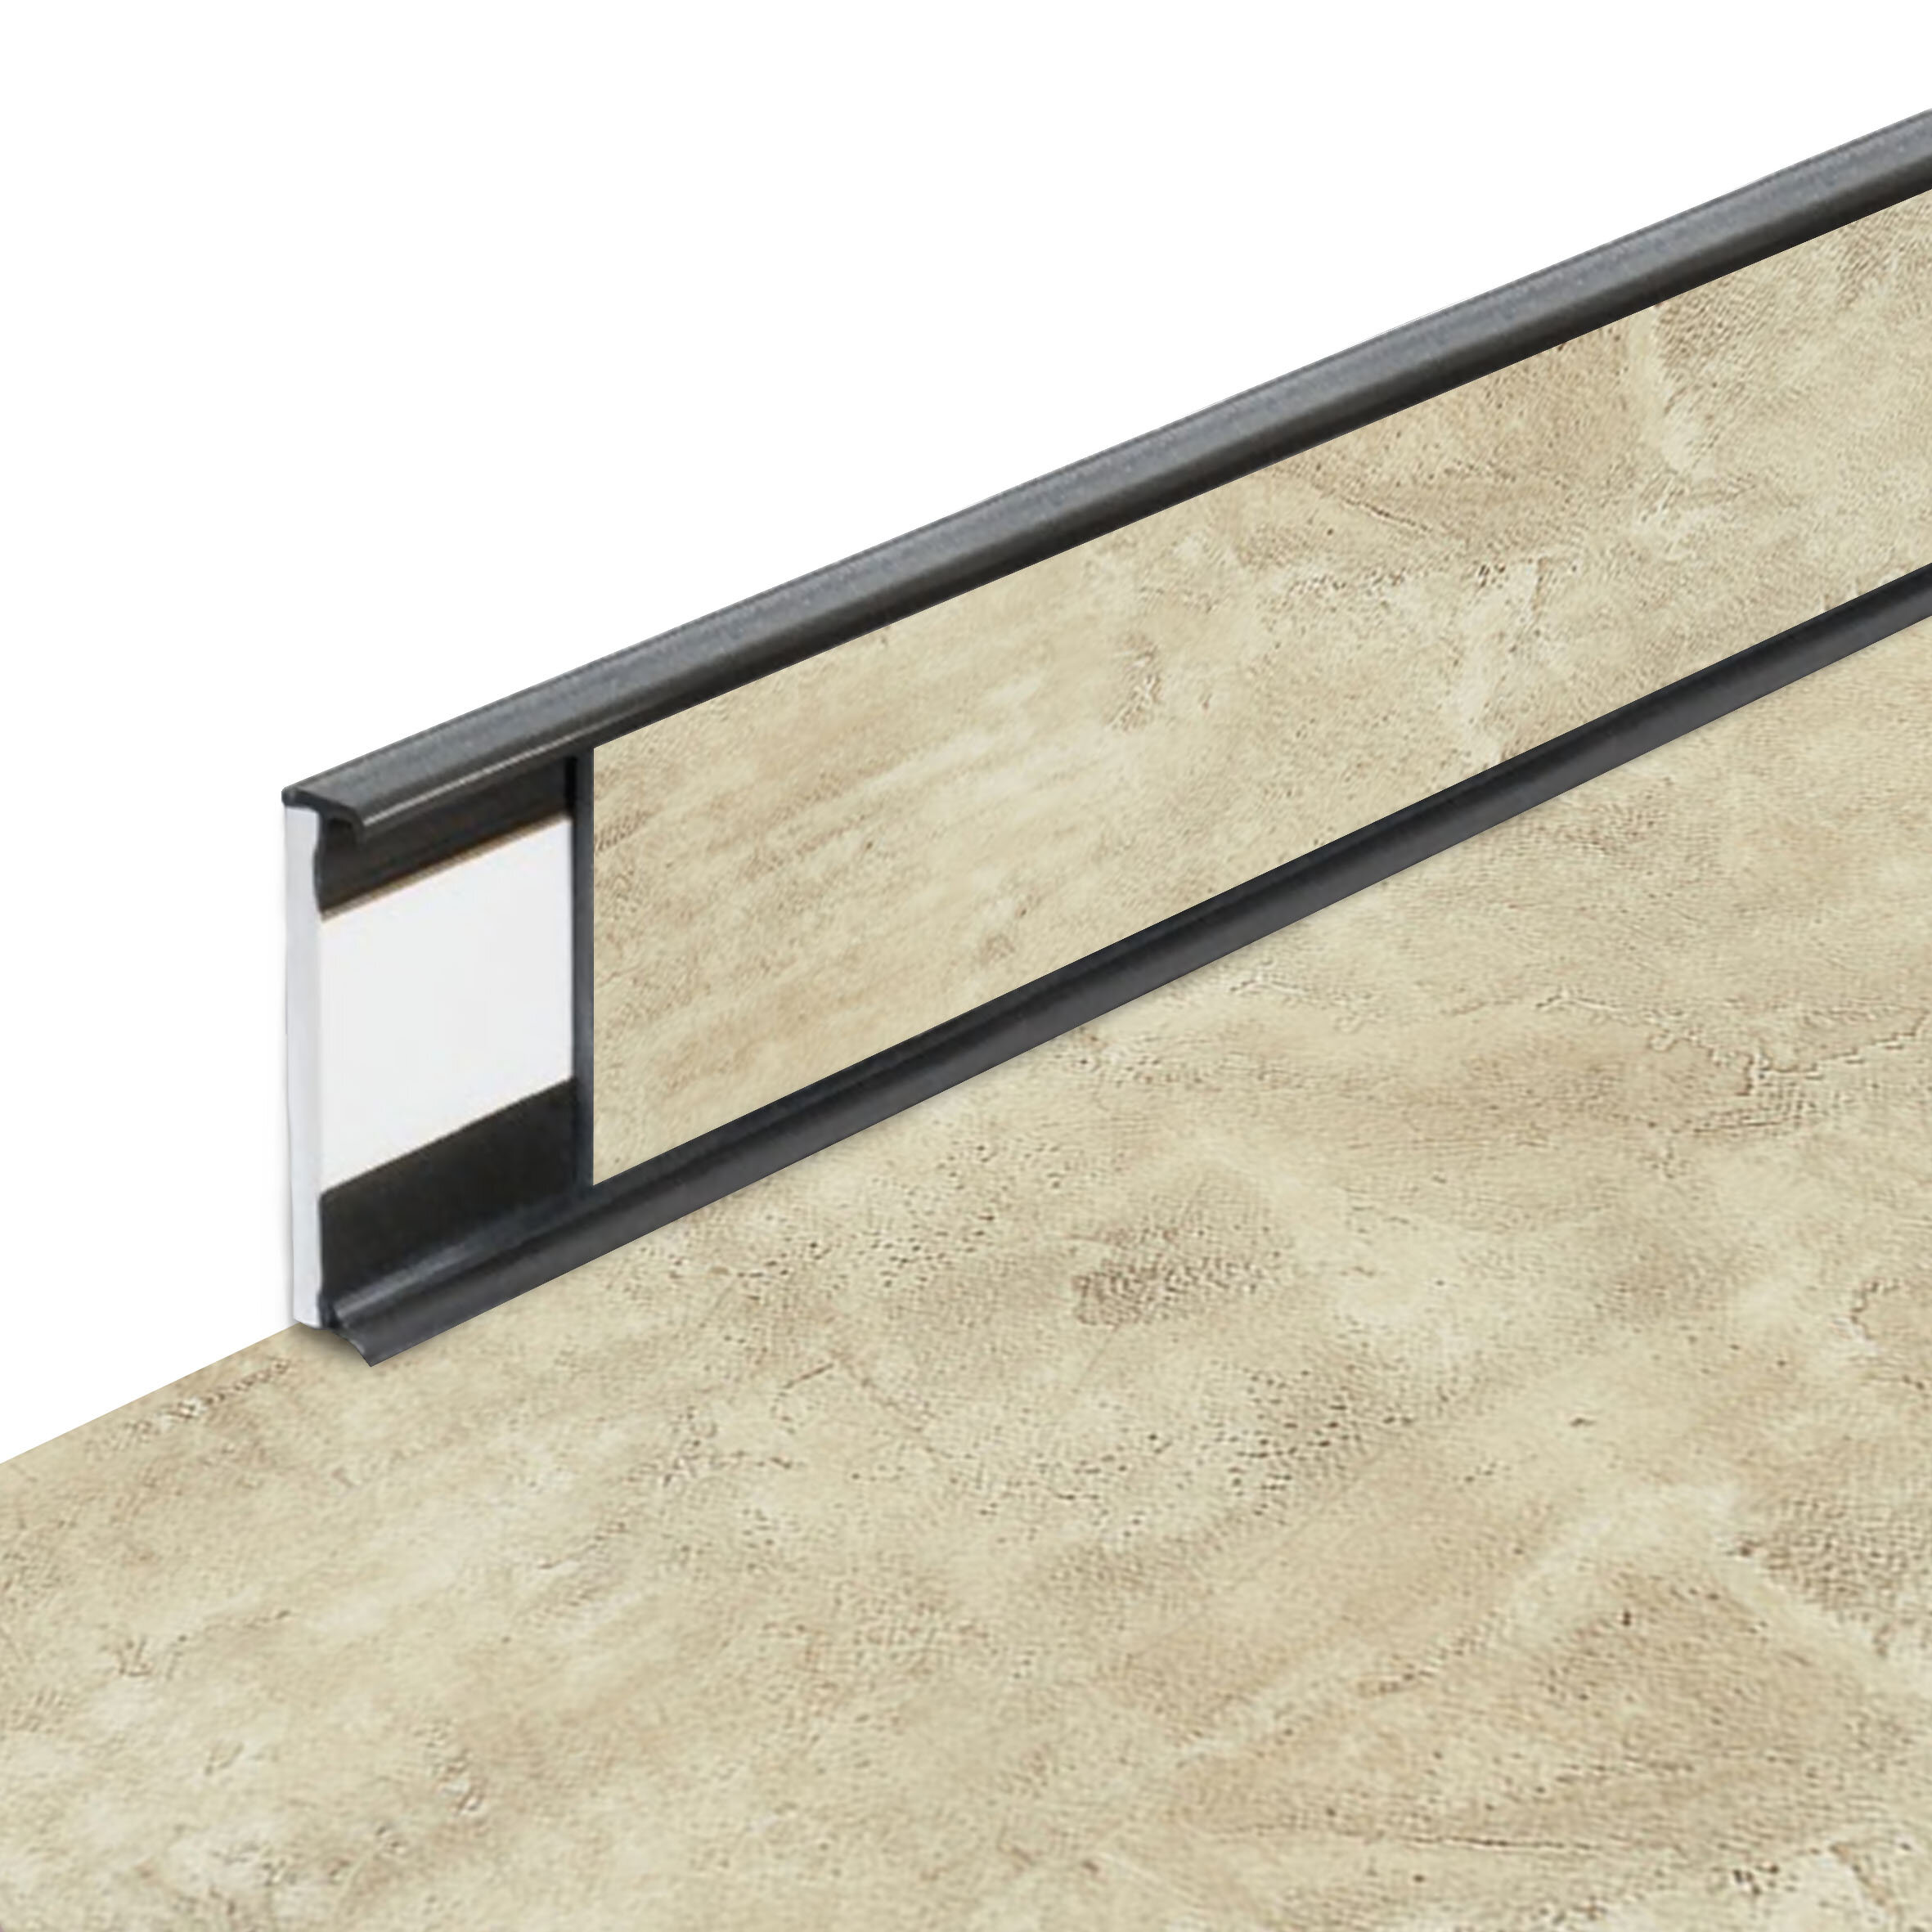 PVC vinylová soklová podlahová lišta Fortelock Business Forsen Sea Bay C016 Graphite - dĺžka 200 cm, výška 5,8 cm, hrúbka 1,2 cm